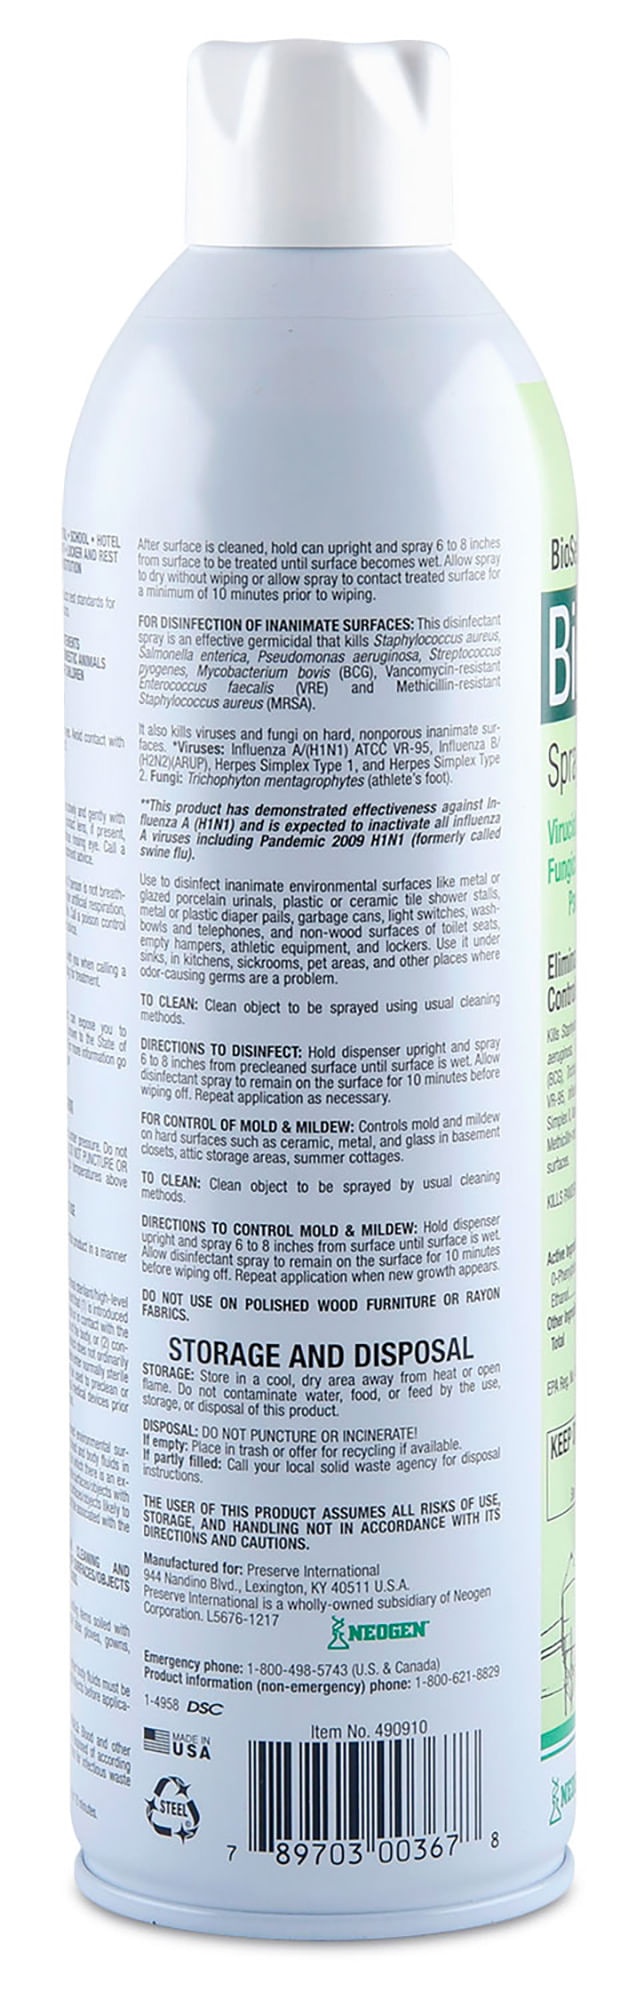 H-42 Virucidal Anti-Bacterial Clean Clippers